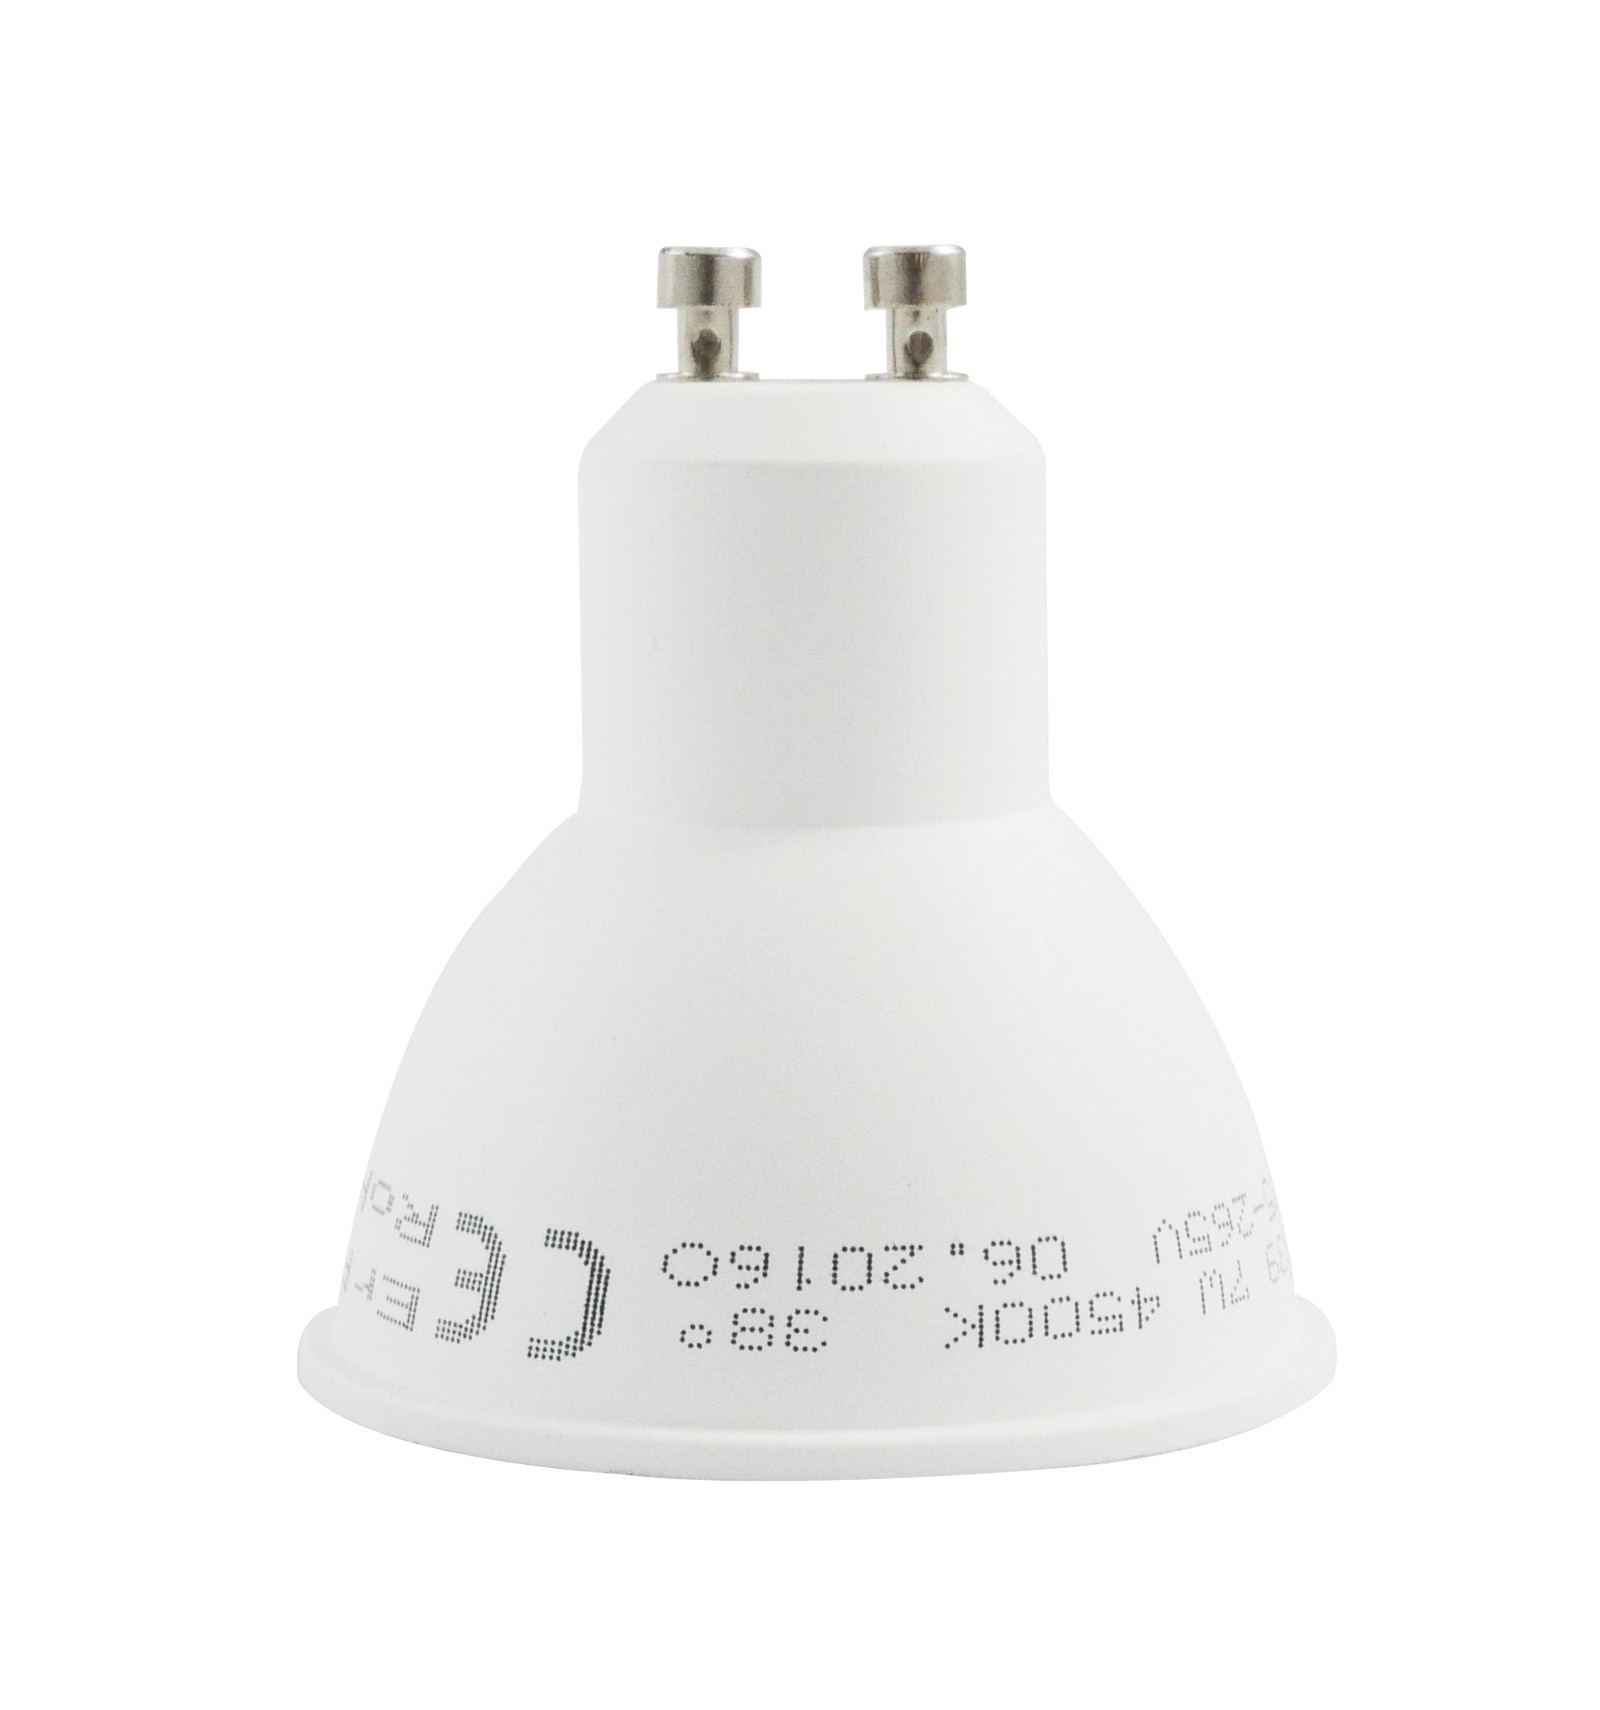 Lot de 10 Ampoules LED GU10 7W eq. 60W 2700K Blanc Chaud